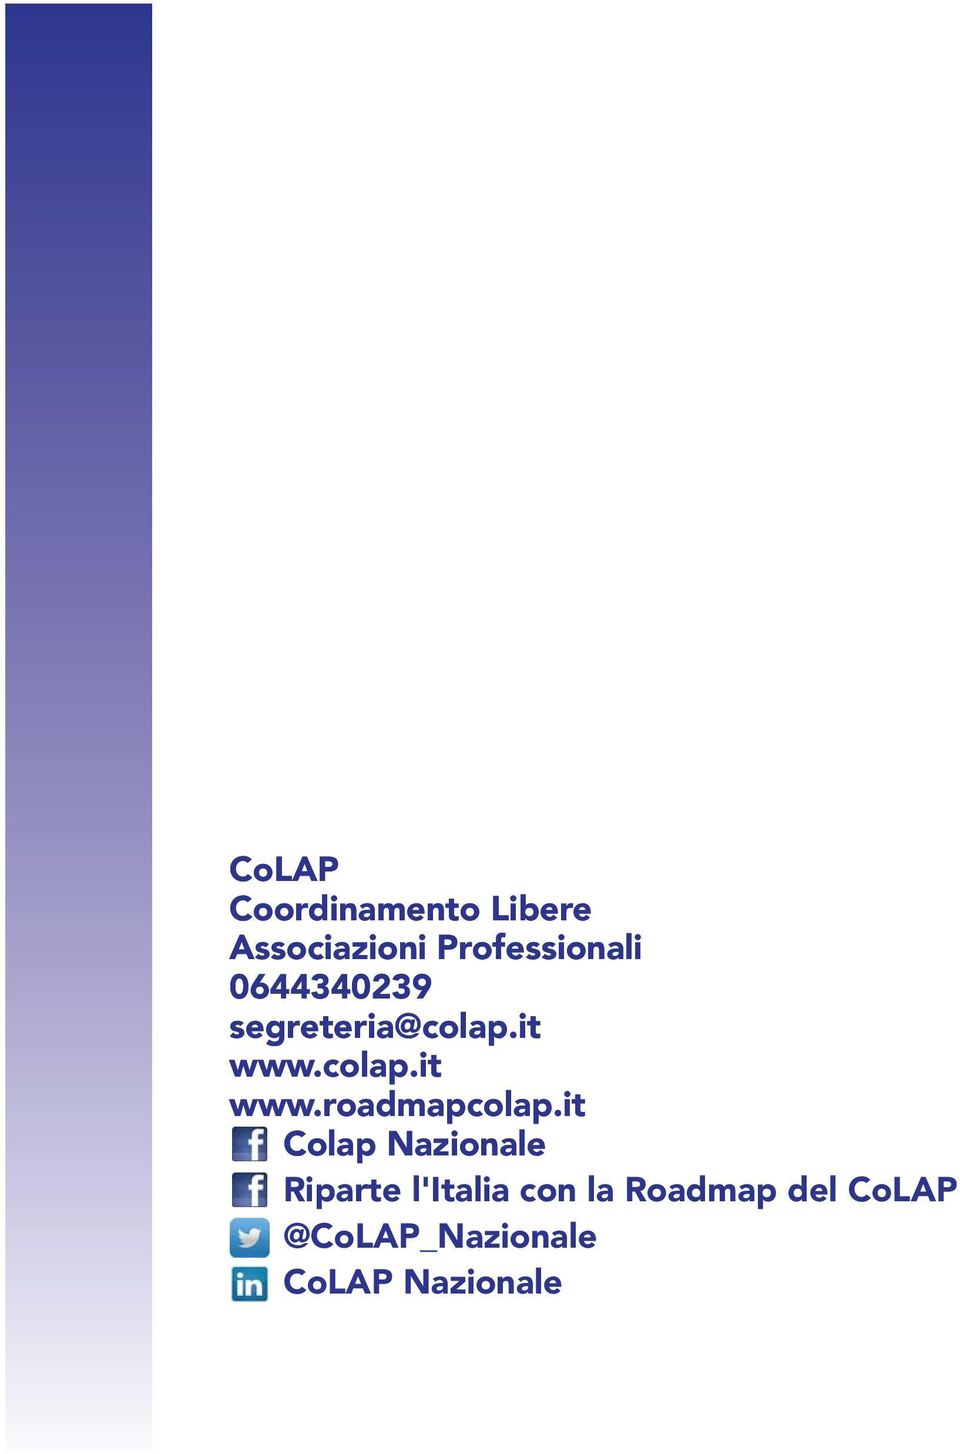 colap.it www.roadmapcolap.